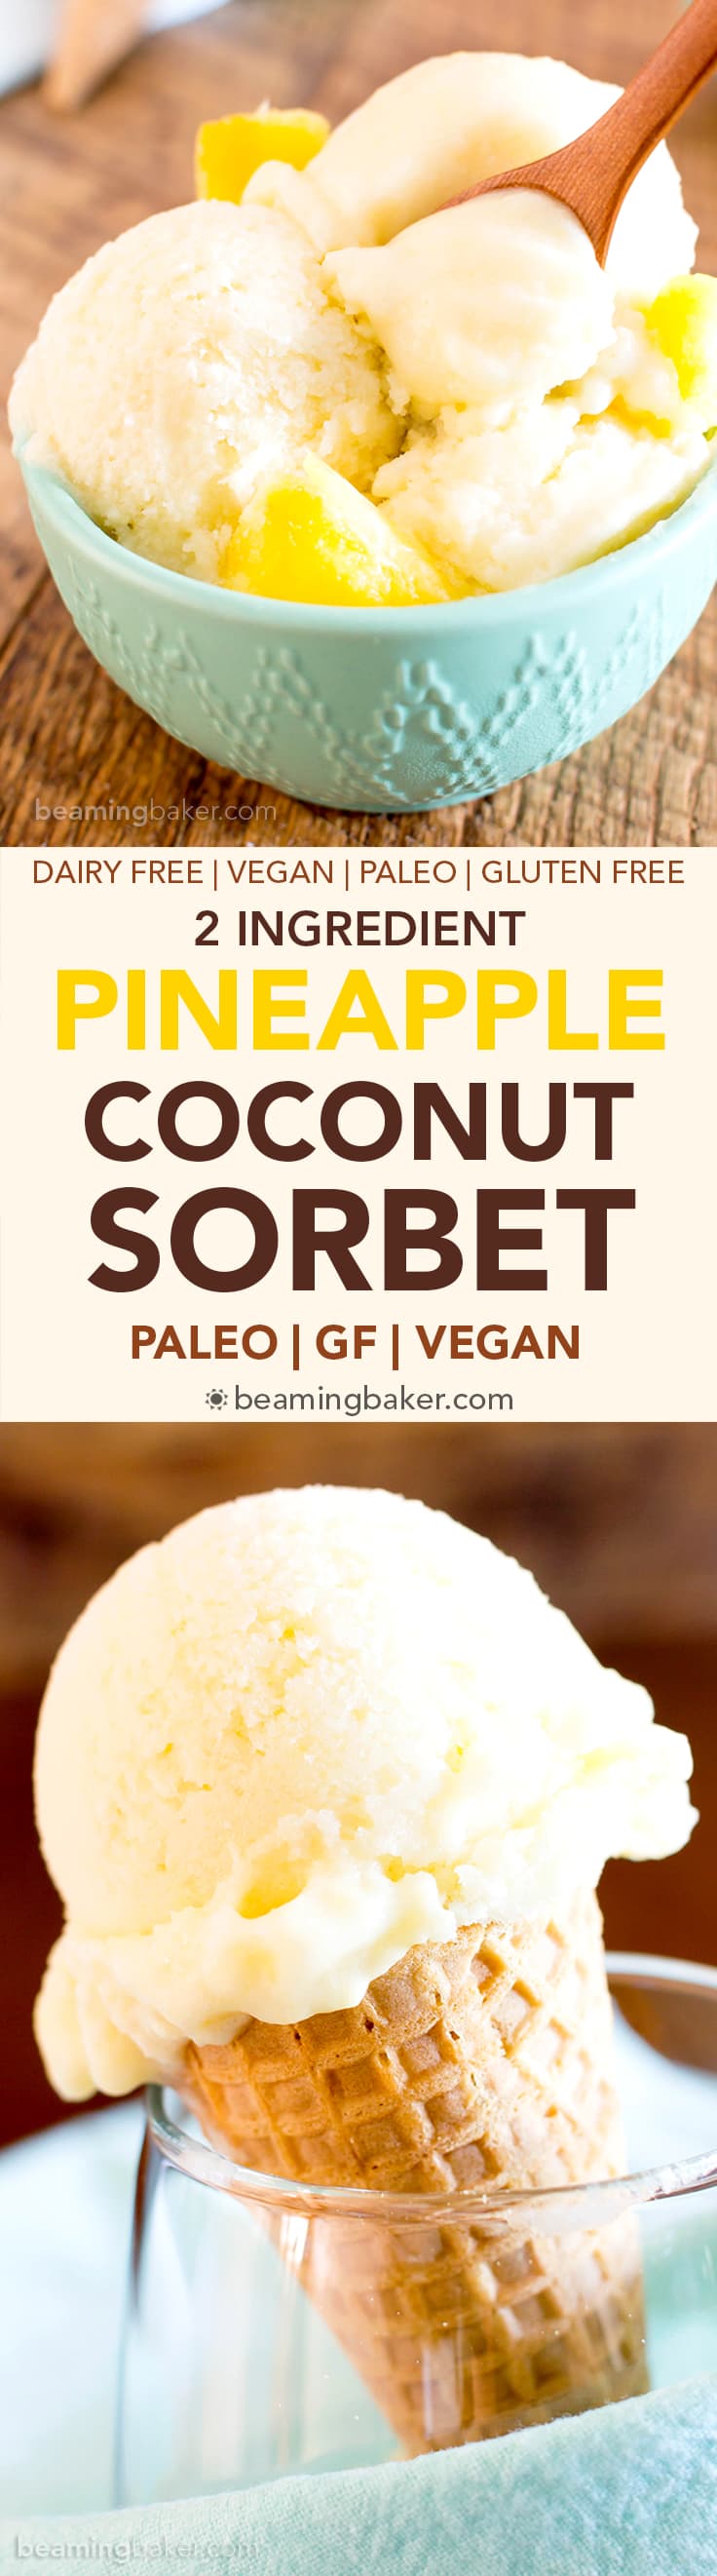 Pineapple Coconut Sorbet: just 2 ingredients and 5 minutes to make delicious coconut pineapple sorbet. Healthy, Dairy-Free, Paleo, Vegan. #Coconut #Pineapple #Sorbet #Vegan | Recipe at BeamingBaker.com